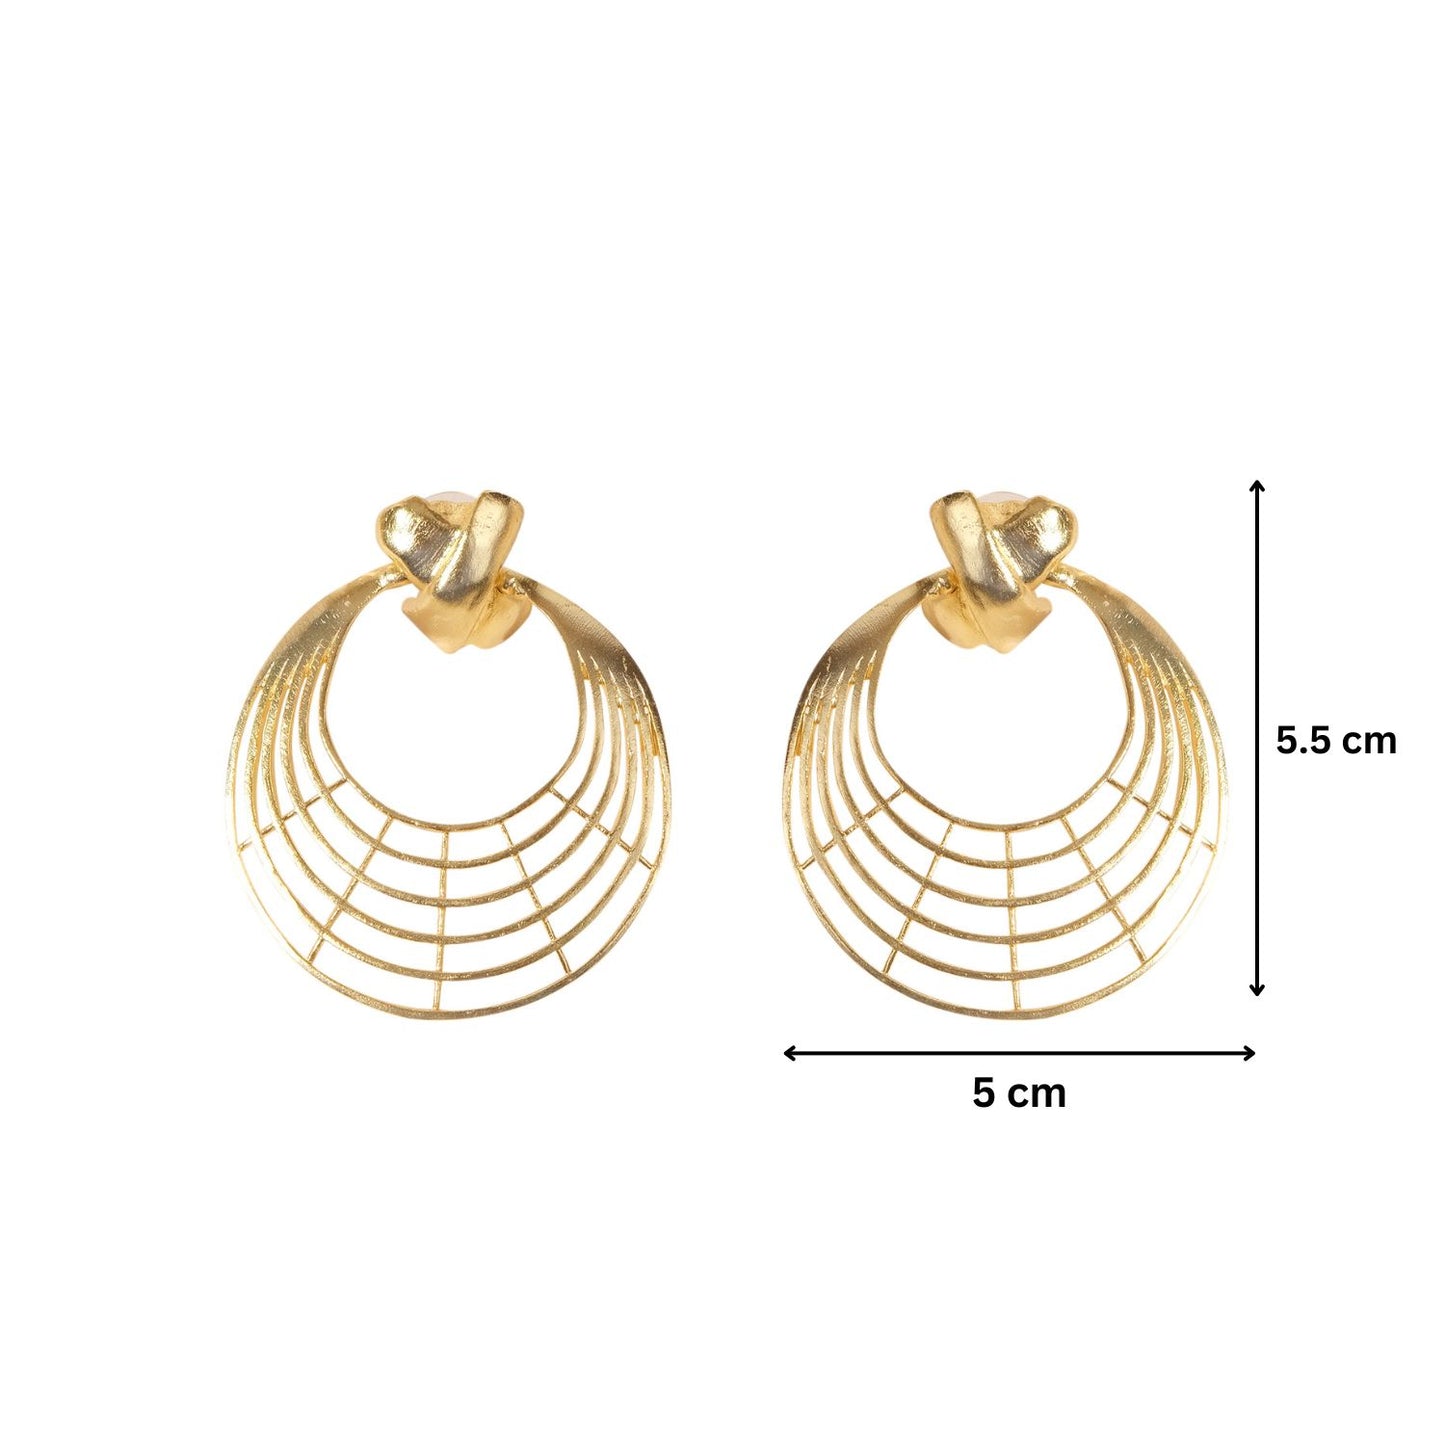 Gilded Halo Orbit Gold Earrings